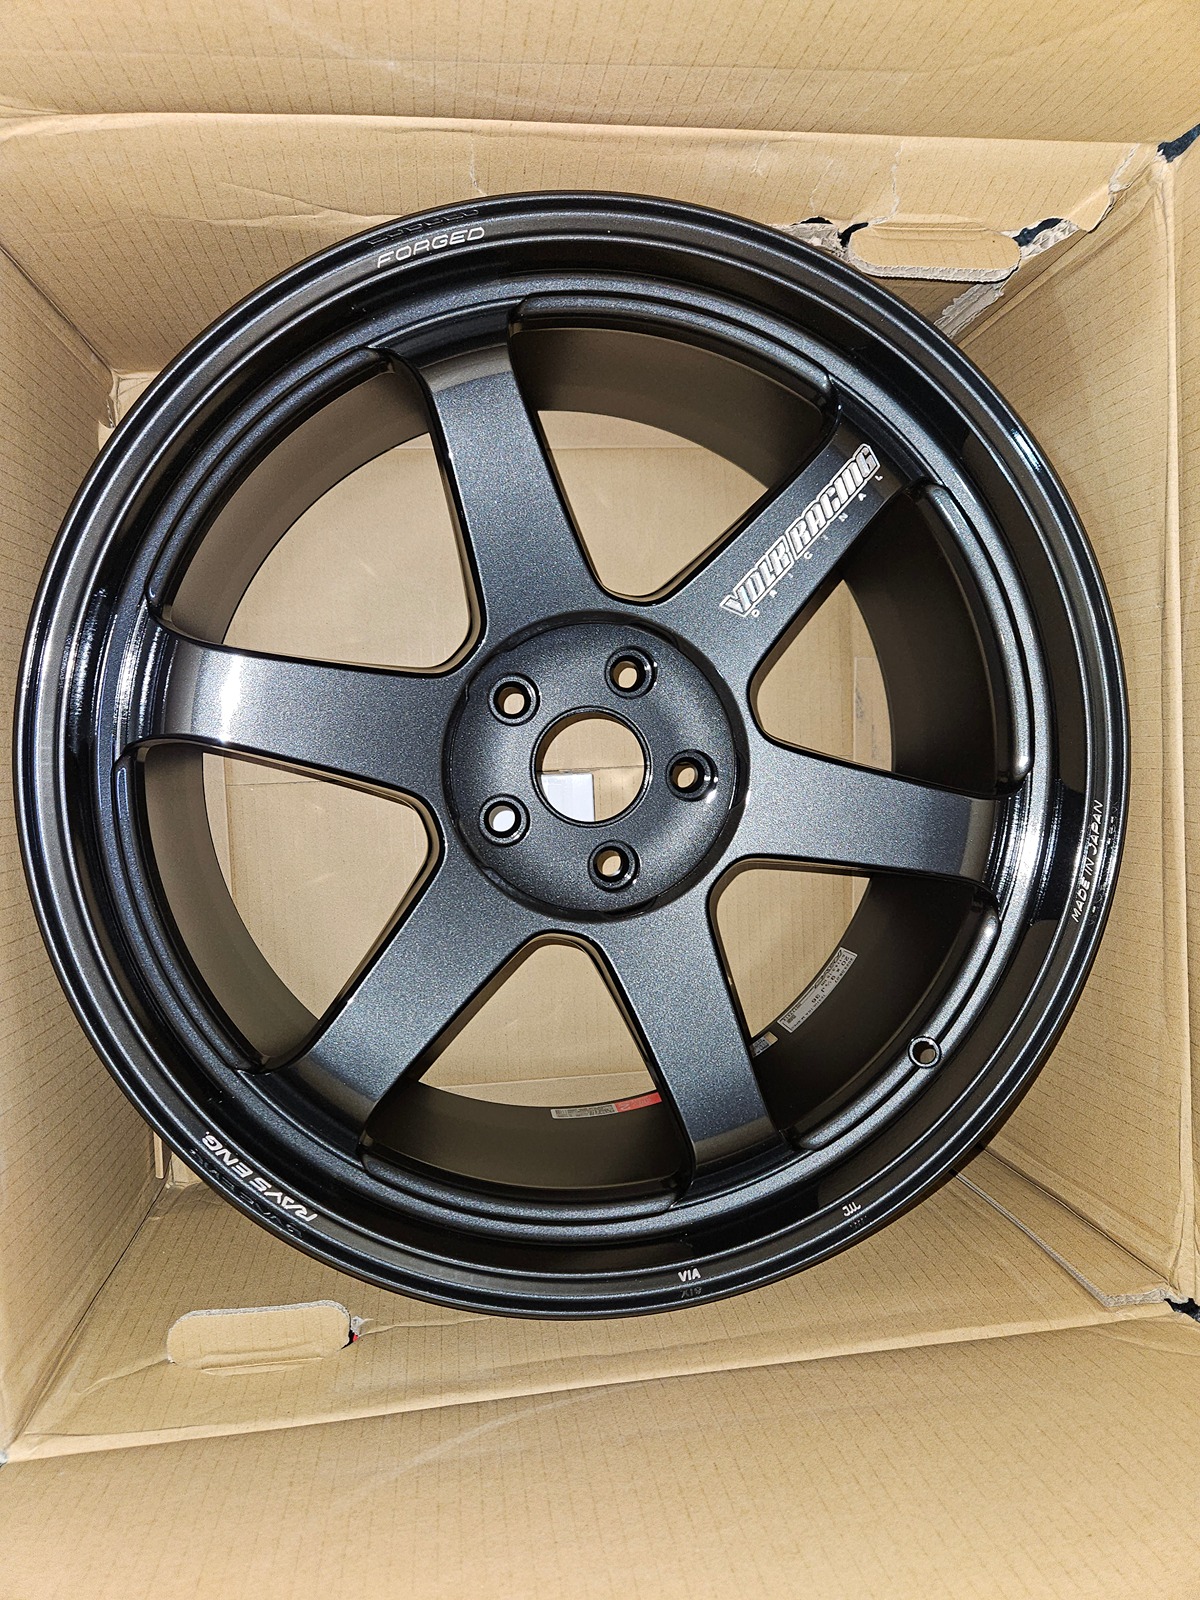 11th Gen Honda Civic Volk Racing TE37 Diamond Black wheels 20x9.5 5x114.3 et 36, set of 4 20240211_075011